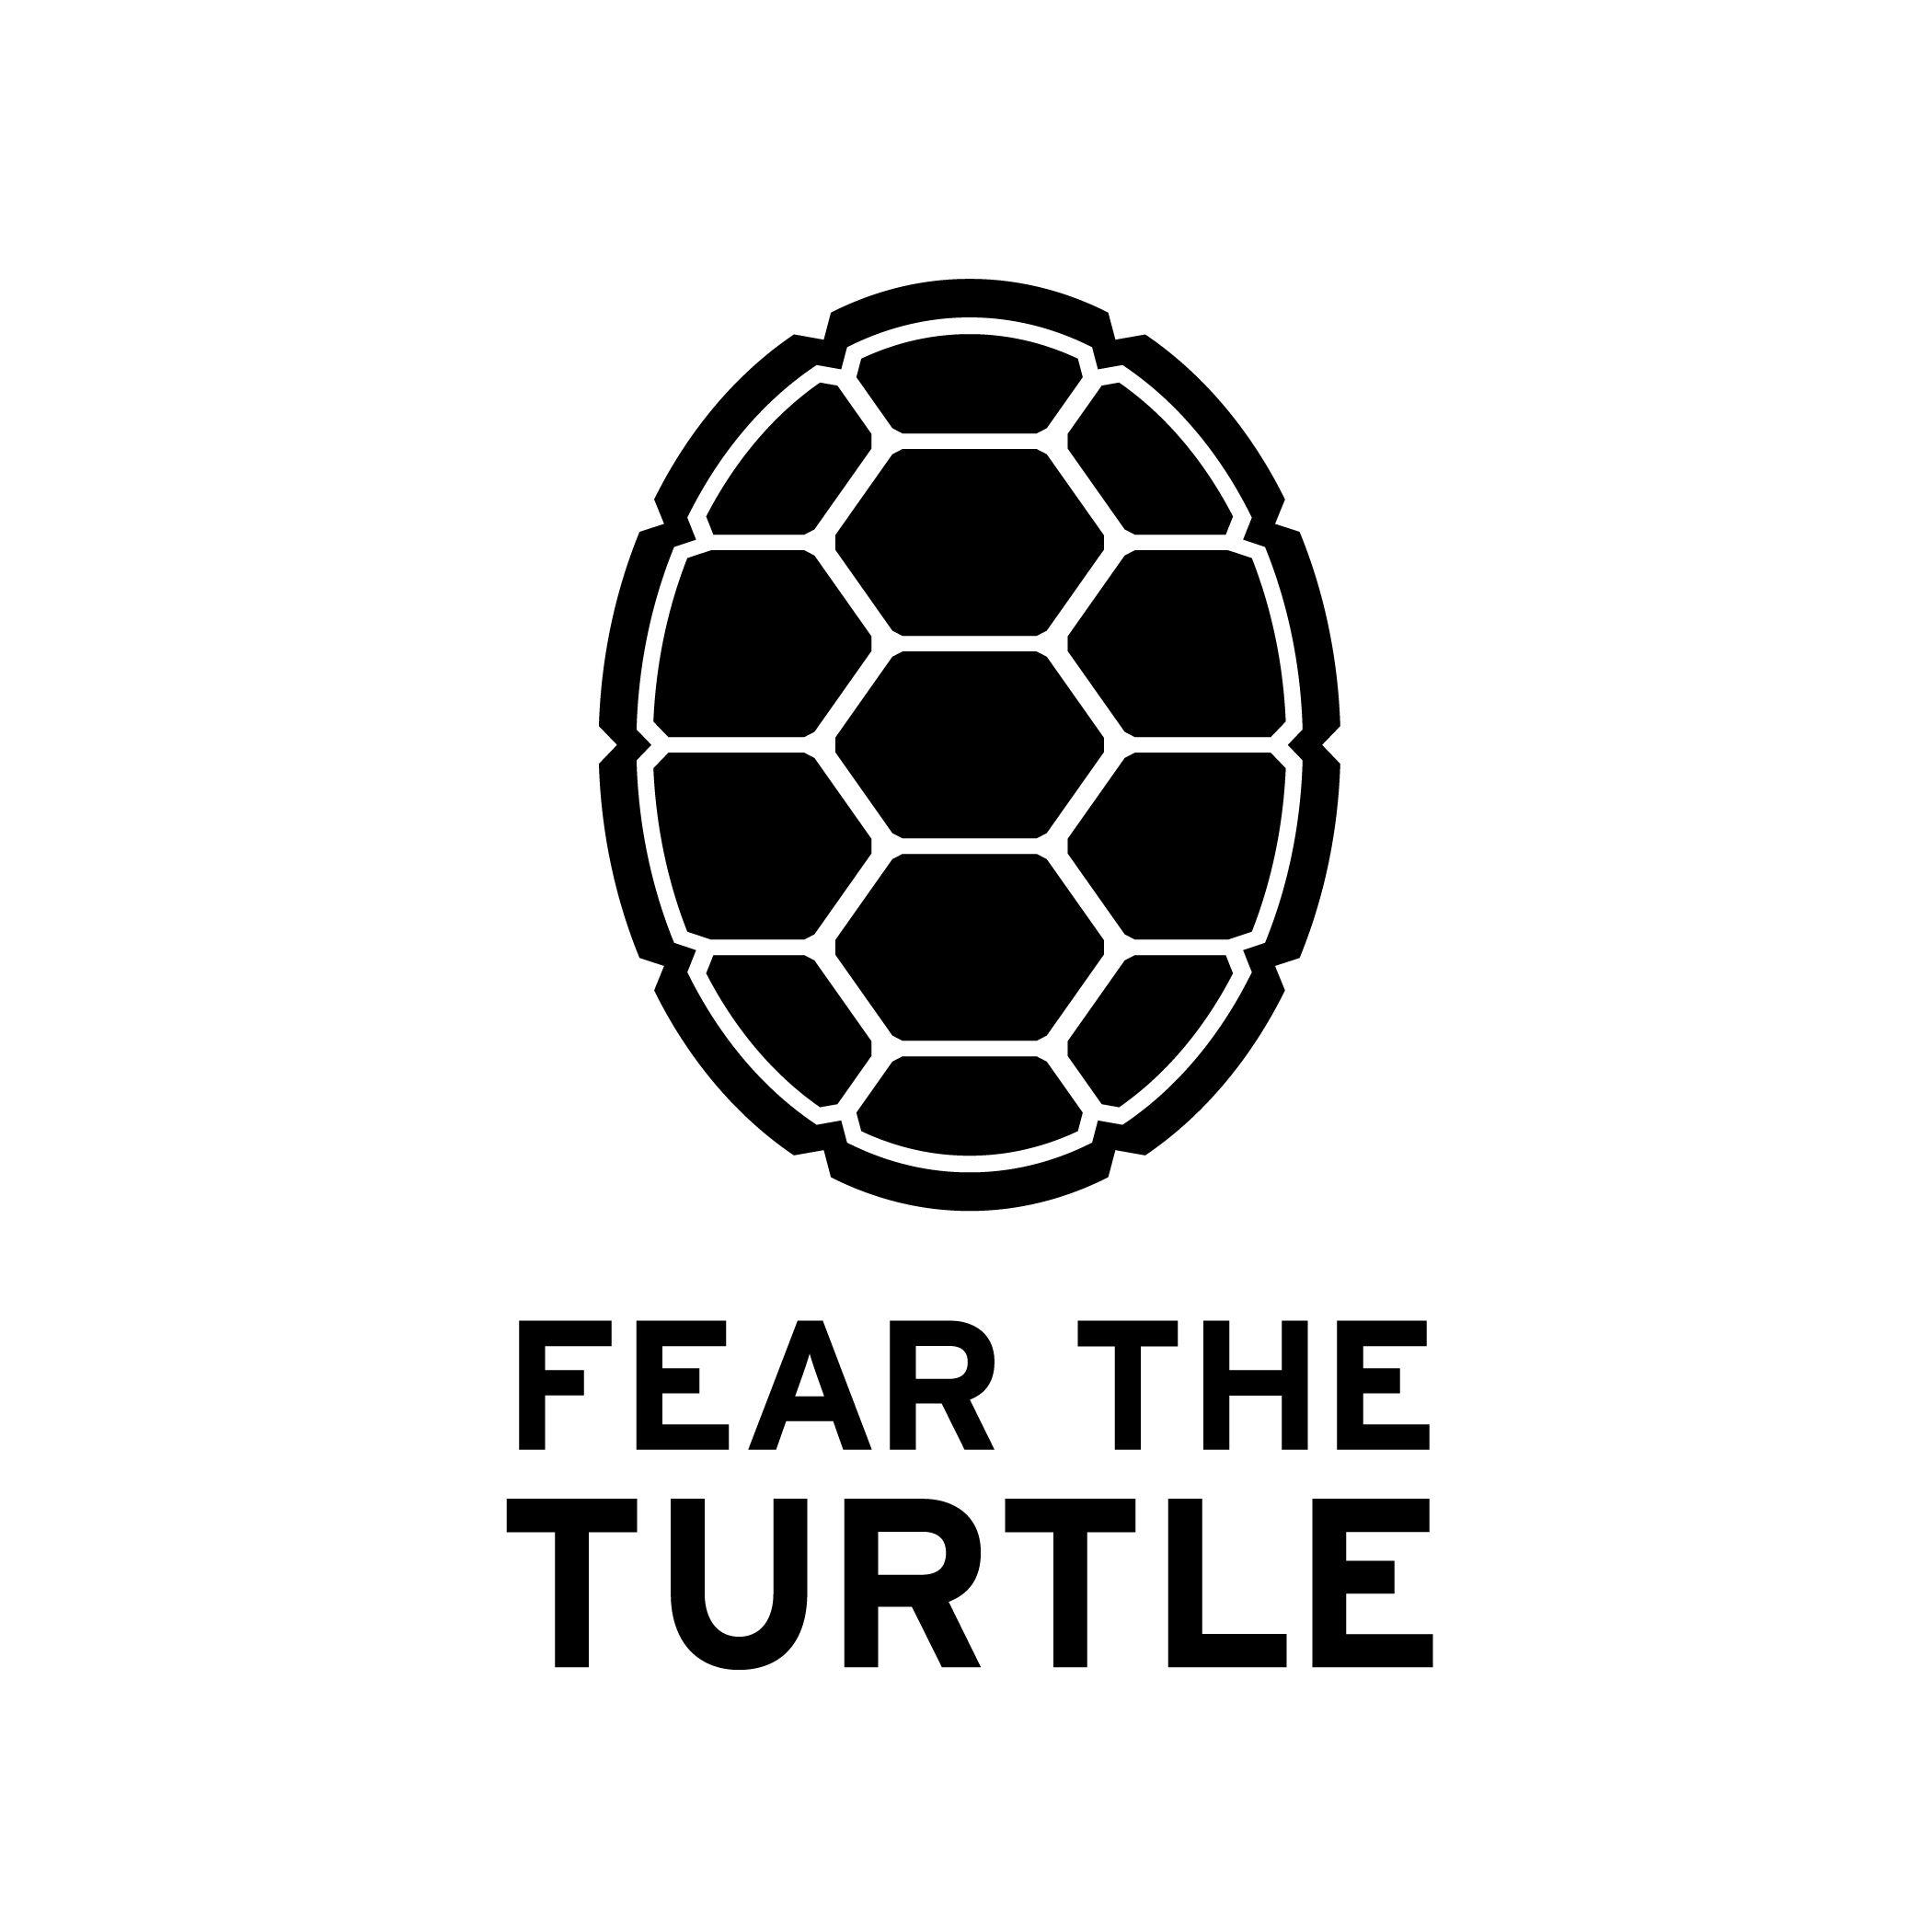 Black and White Turtle Logo - Trademark Licensing. University of Maryland